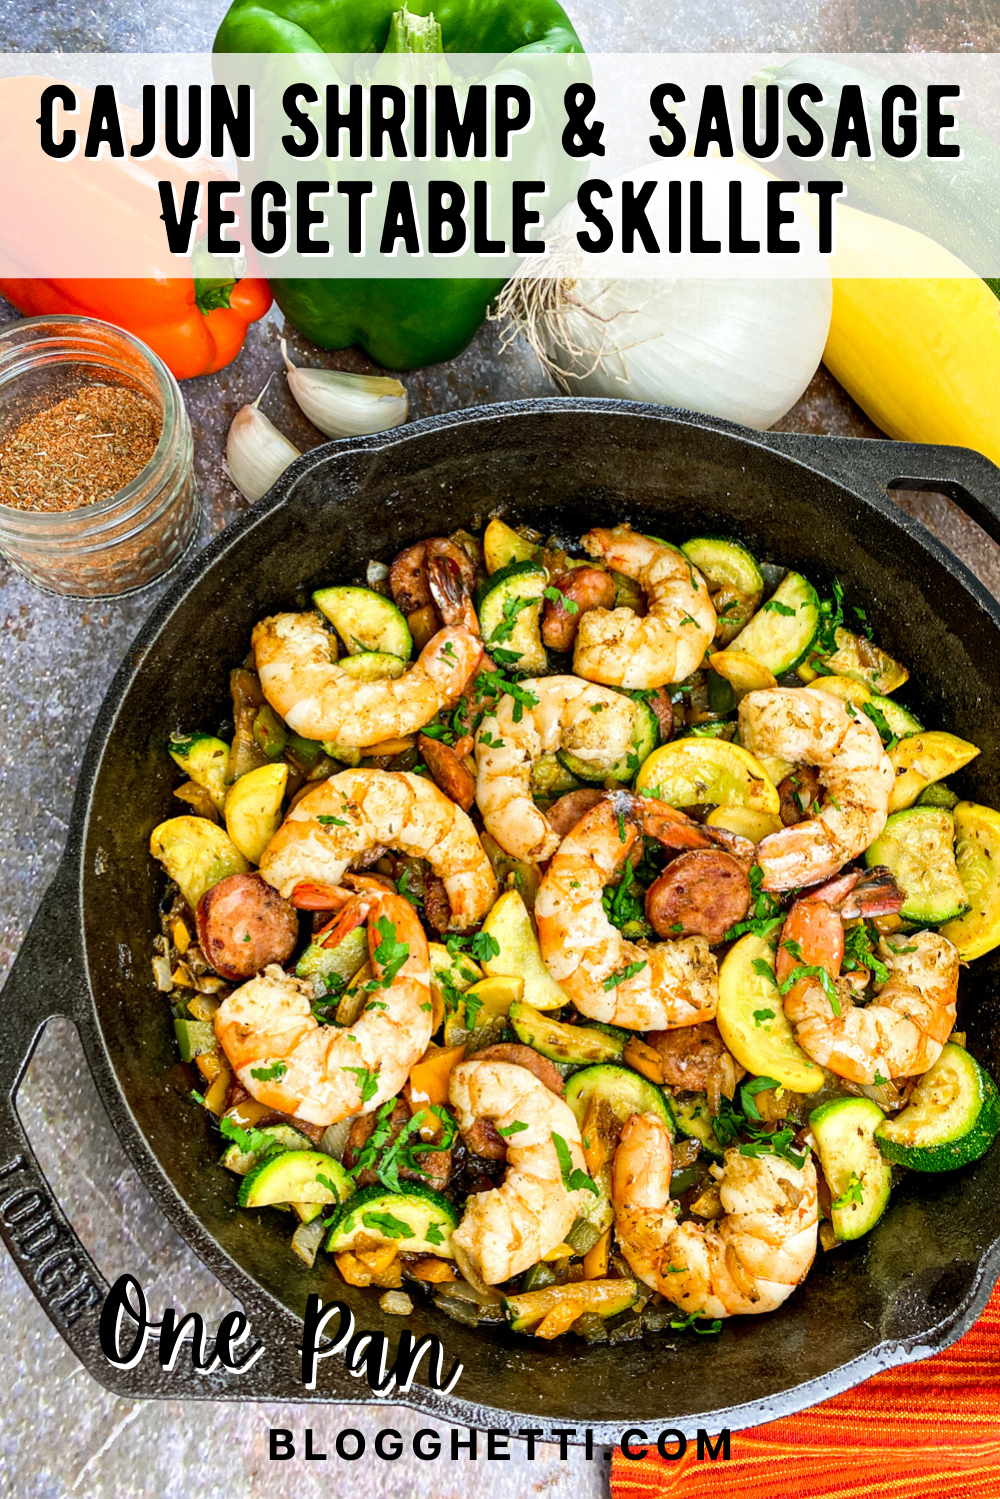 https://blogghetti.com/wp-content/uploads/2021/04/Cajun-Shrimp-sausage-vegetable-skillet-with-text-overlay.png